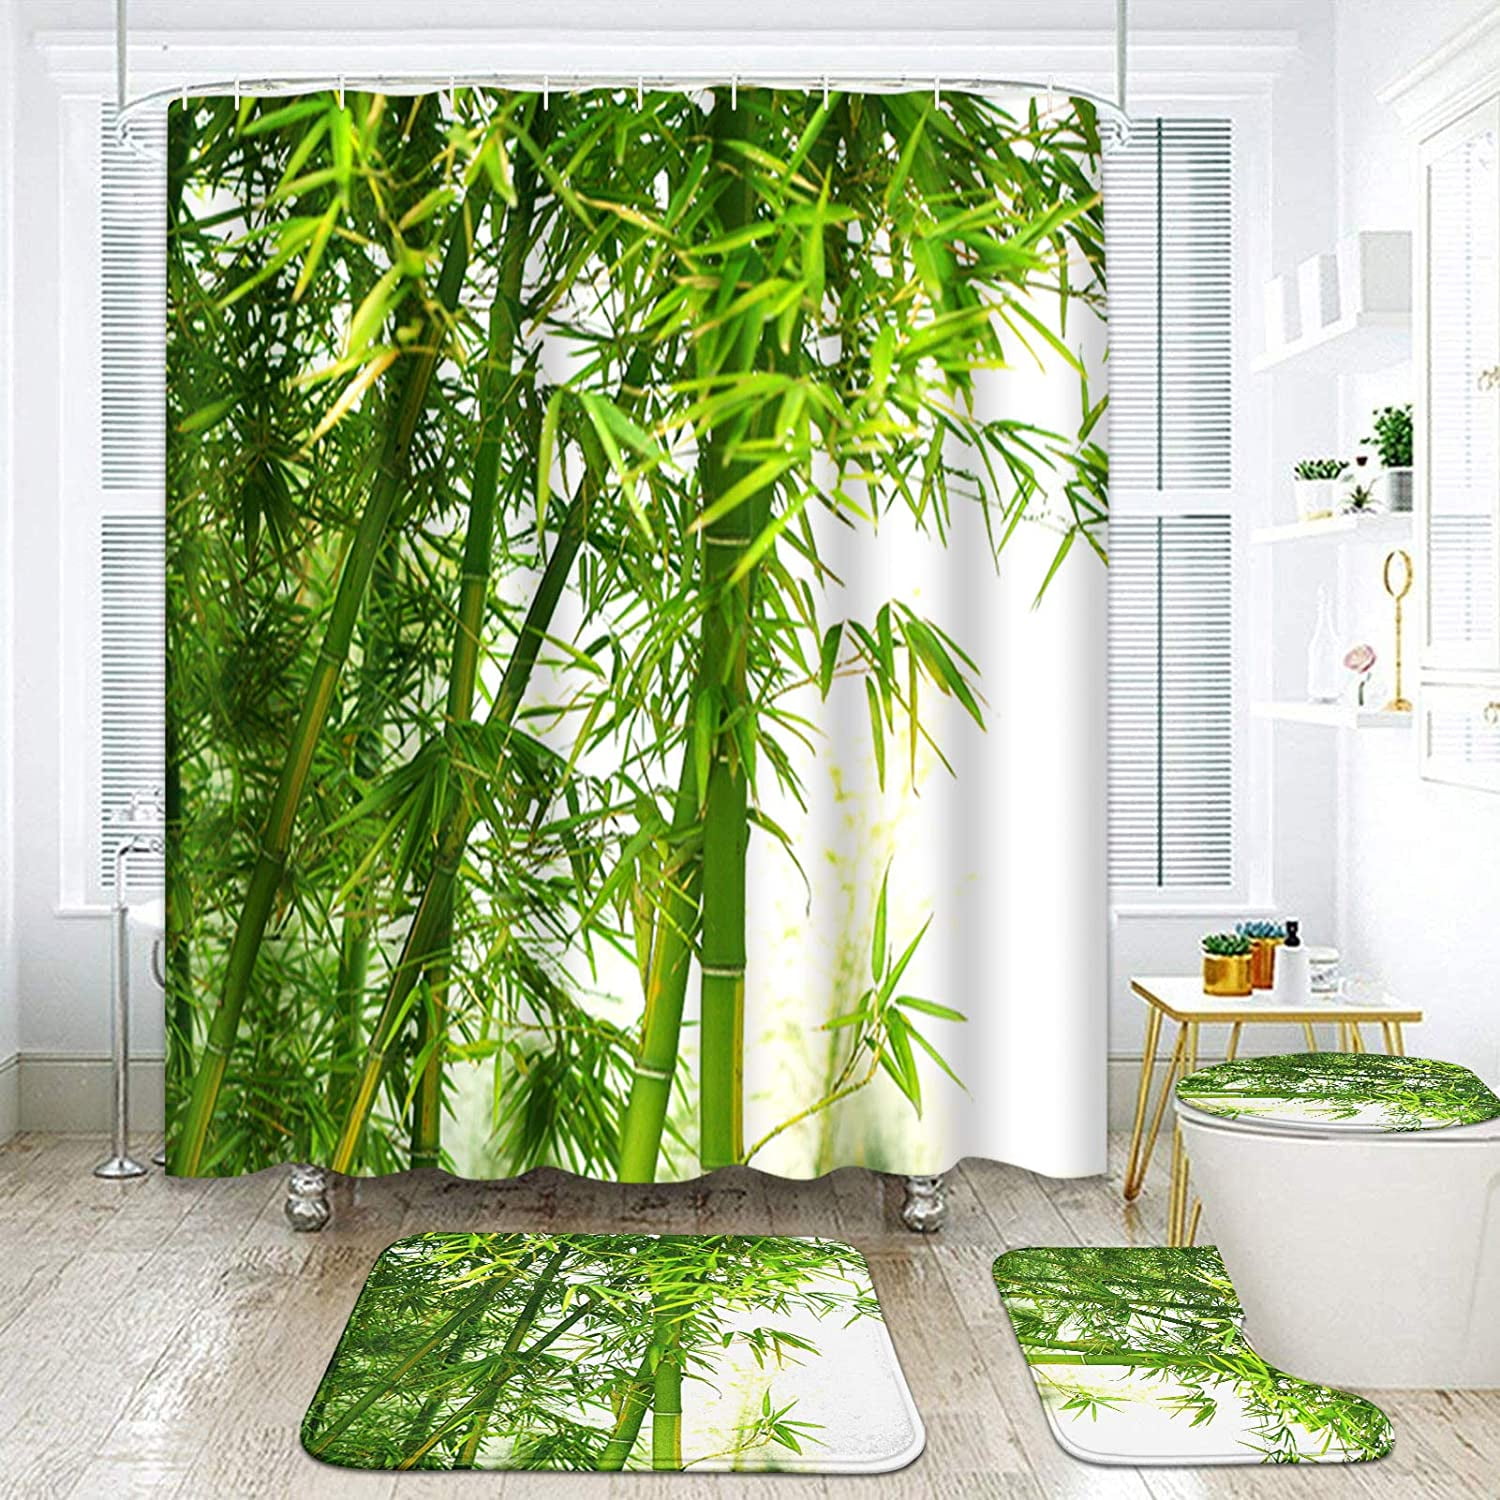 Bamboo Waterproof Bathroom Shower Curtain Toilet Cover Mat Non-Slip Rug Set 